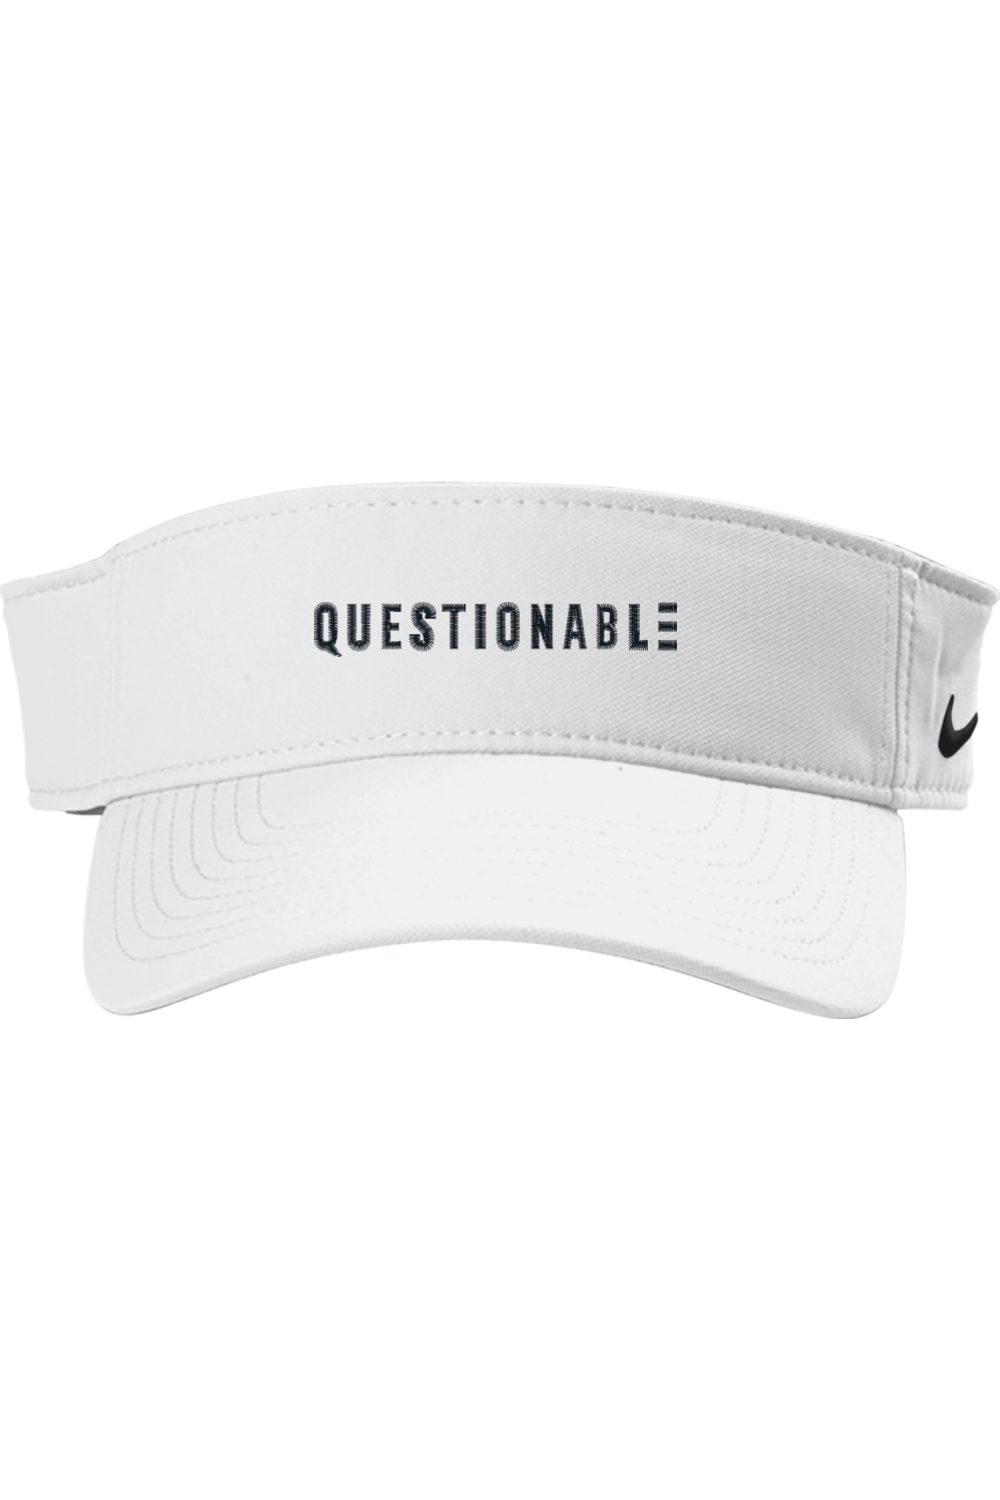 Questionable - Nike Dri-FIT Team Visor